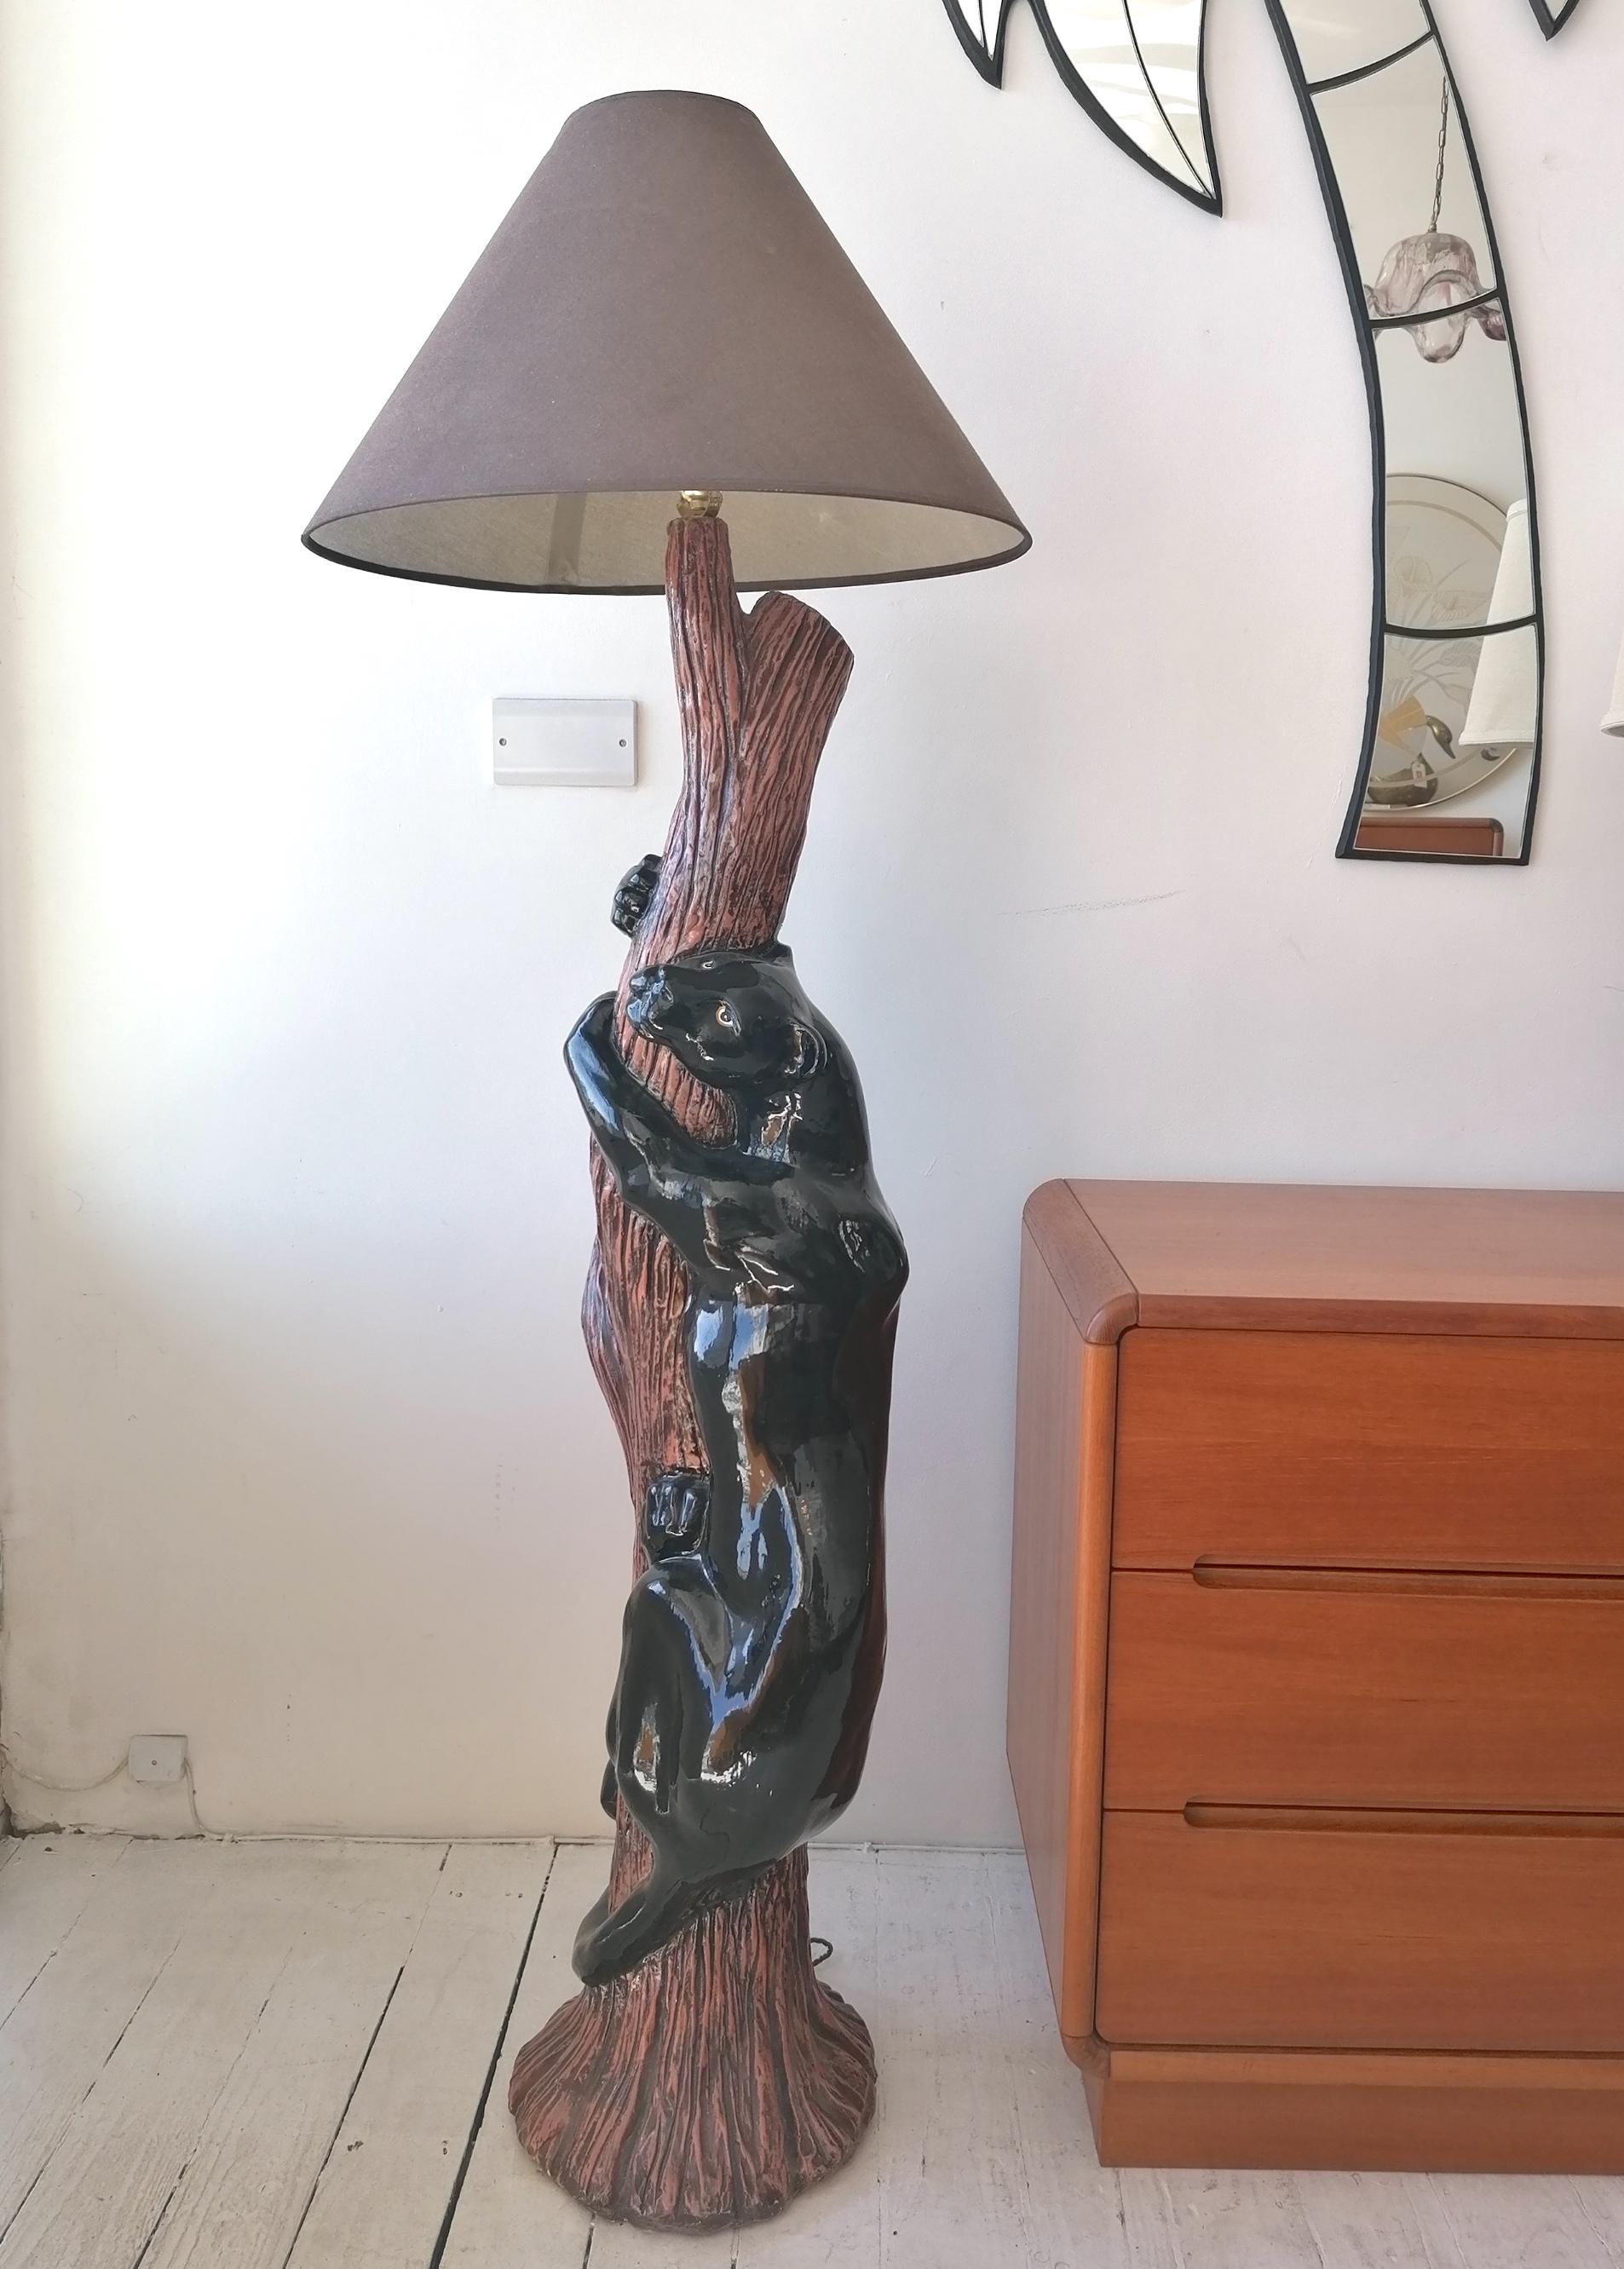 panther lamp